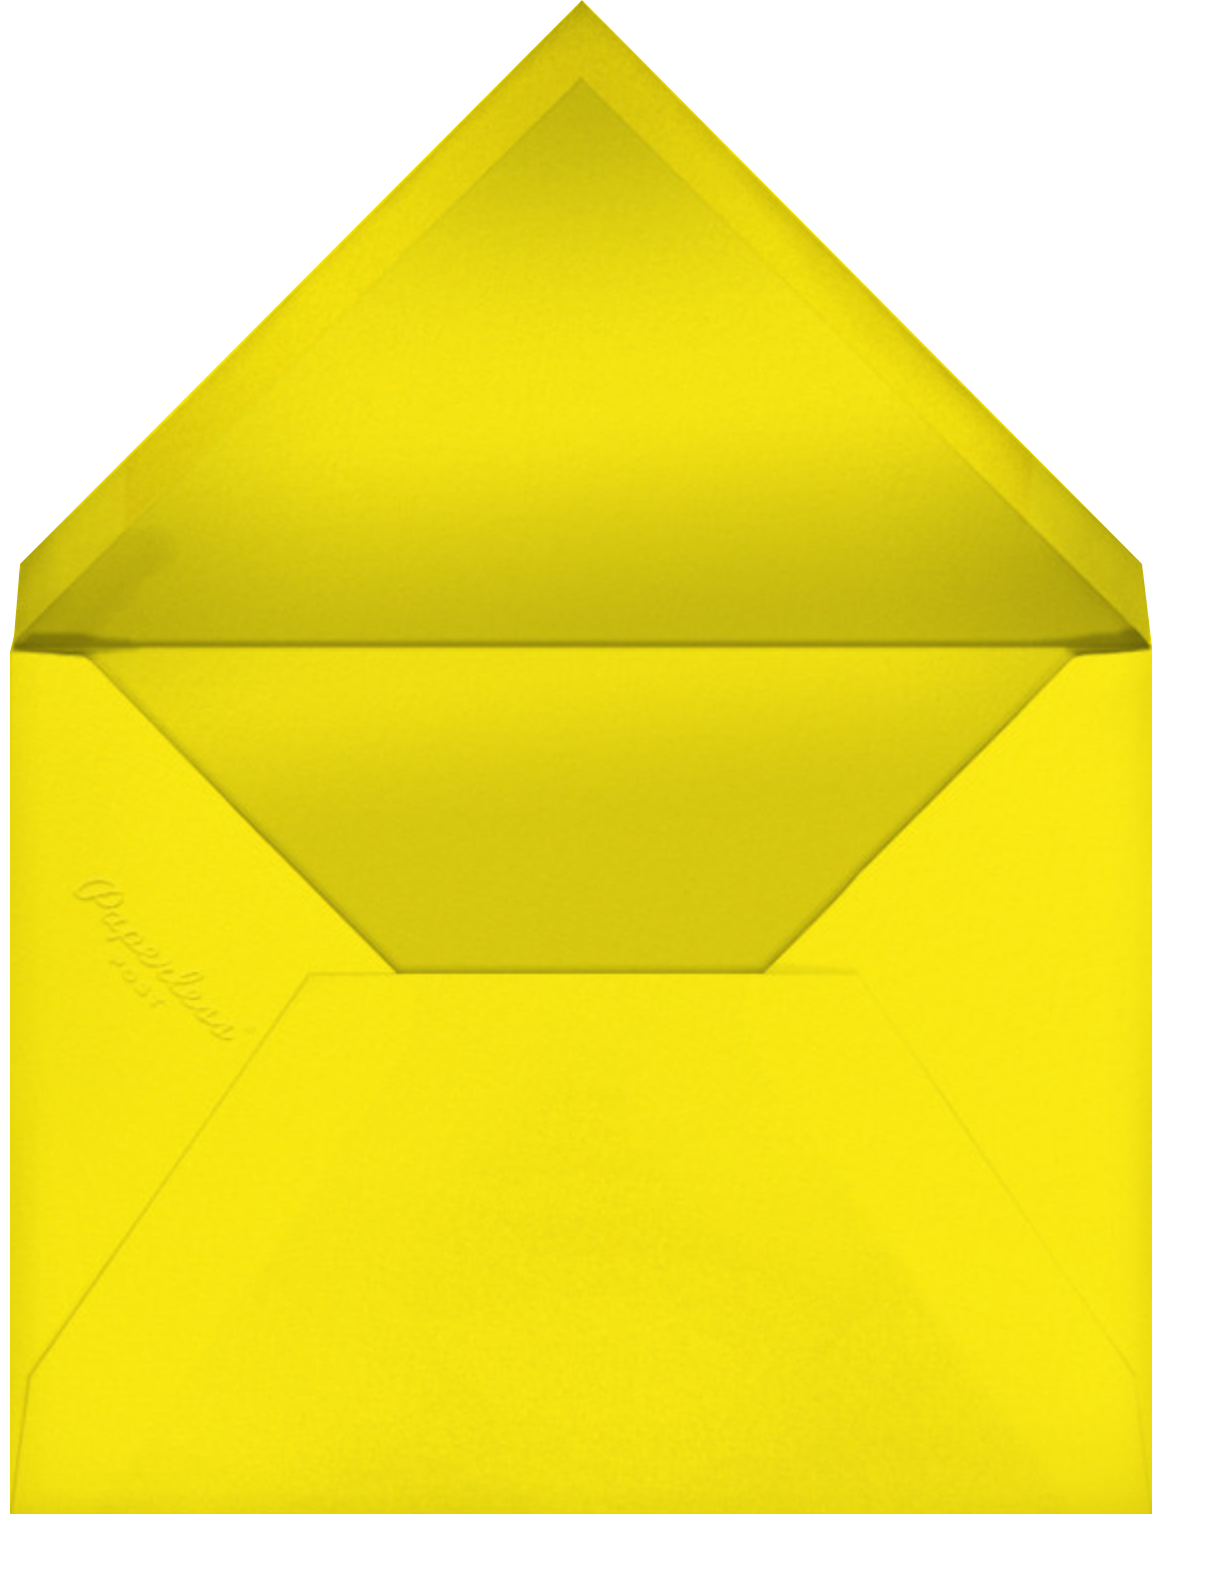 True Love - Paperless Post - Envelope